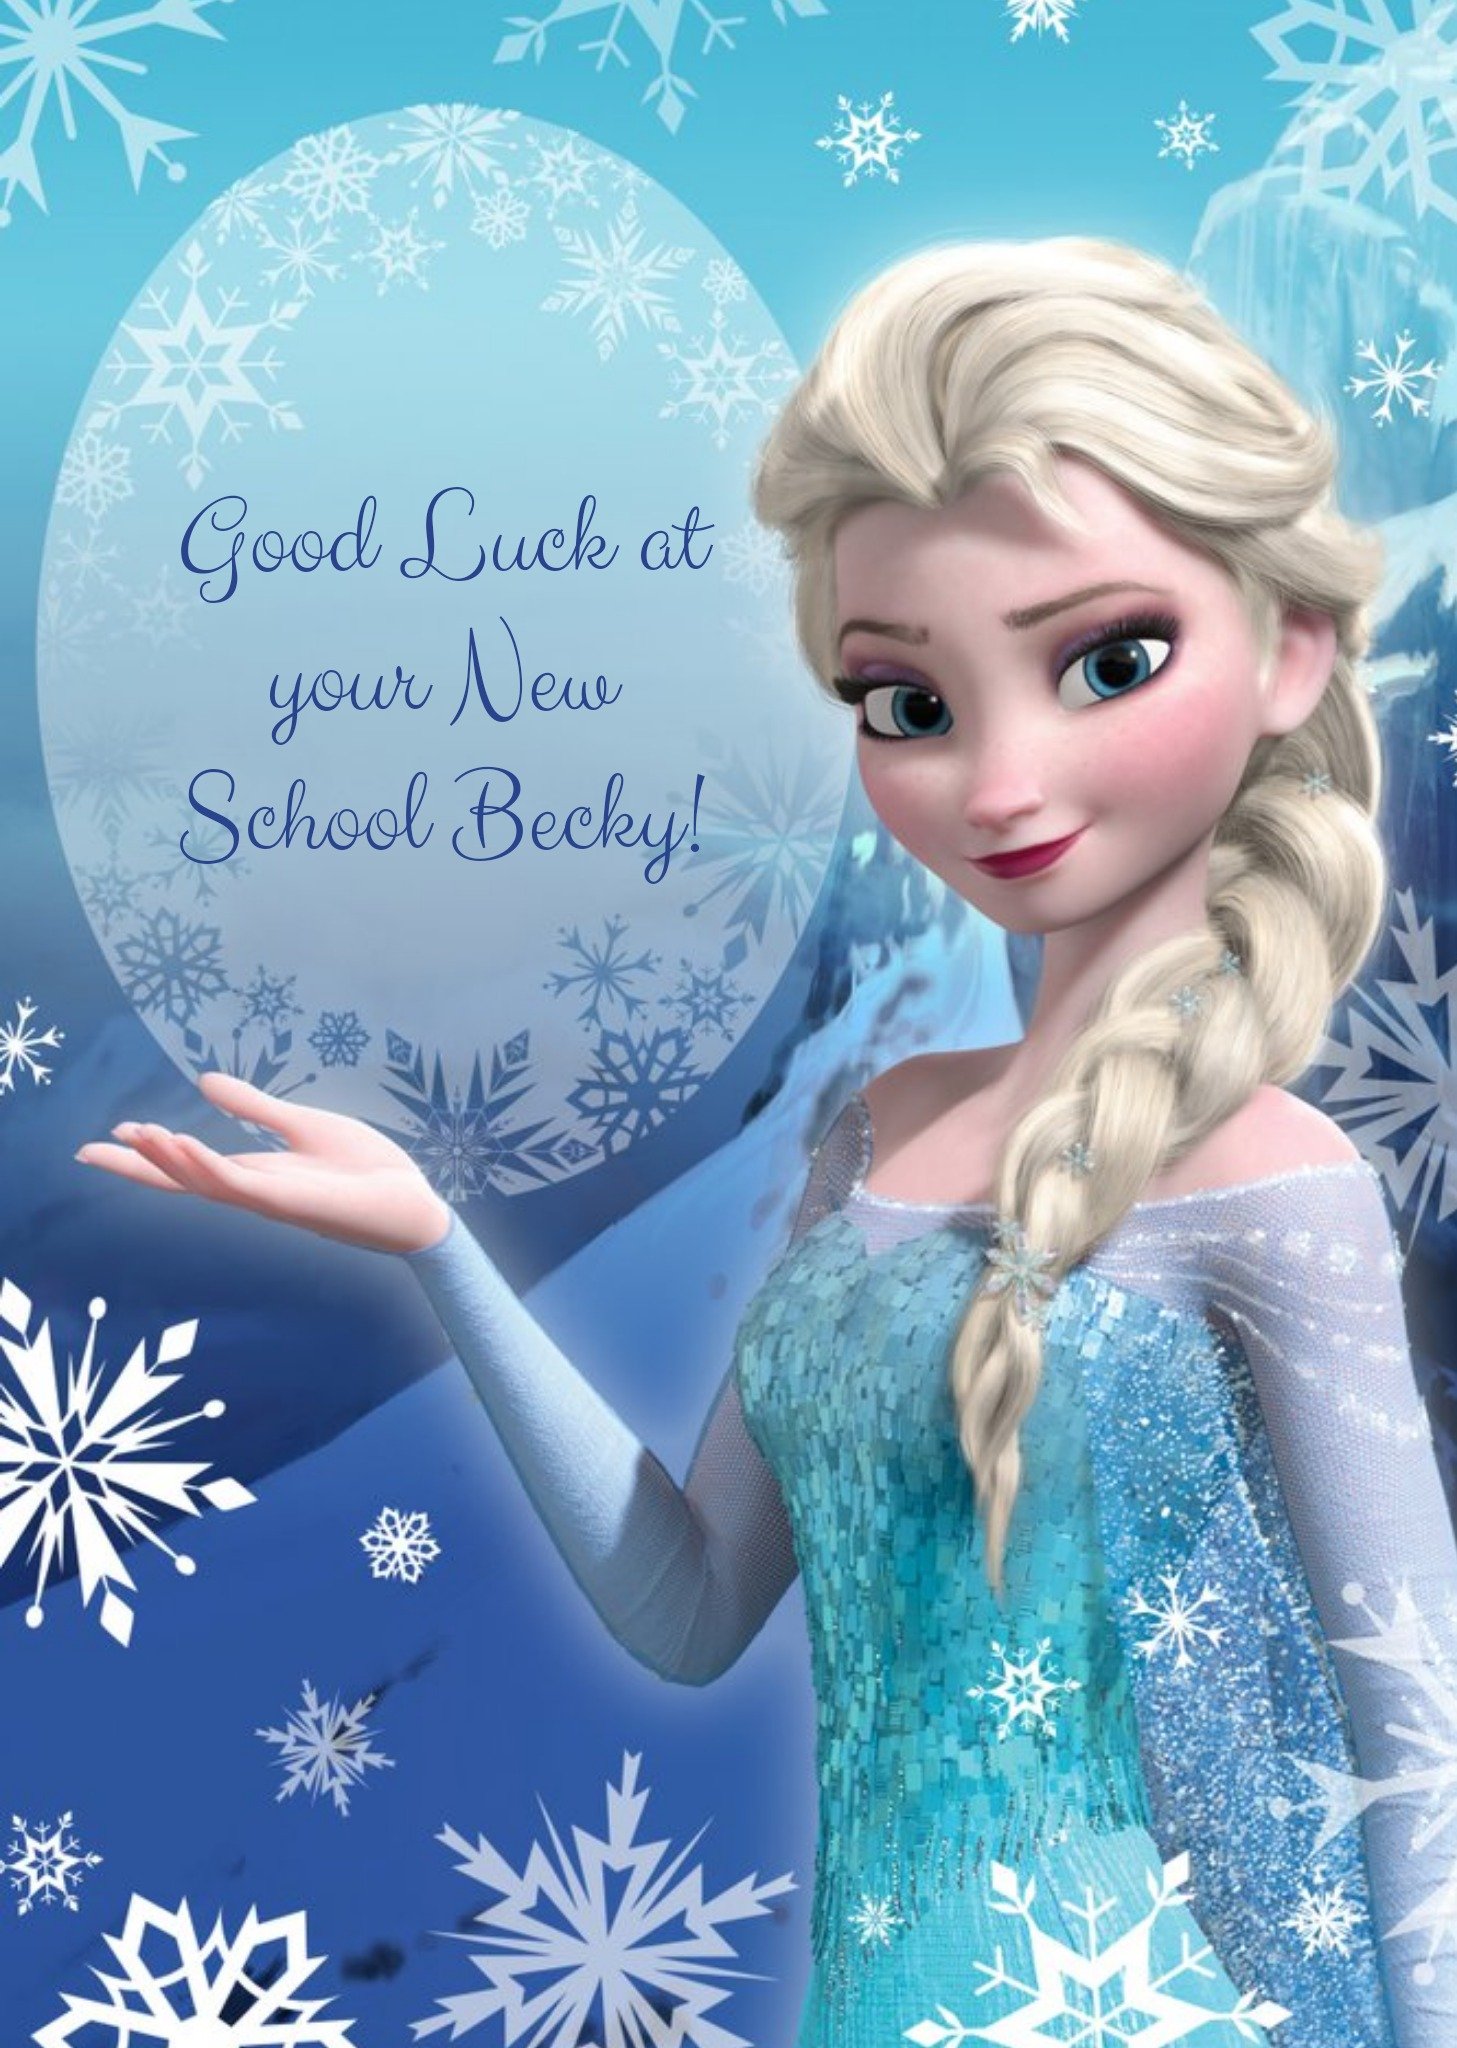 Disney Frozen Elsa Ice Queen Personalised Good Luck At Your New School Card Ecard